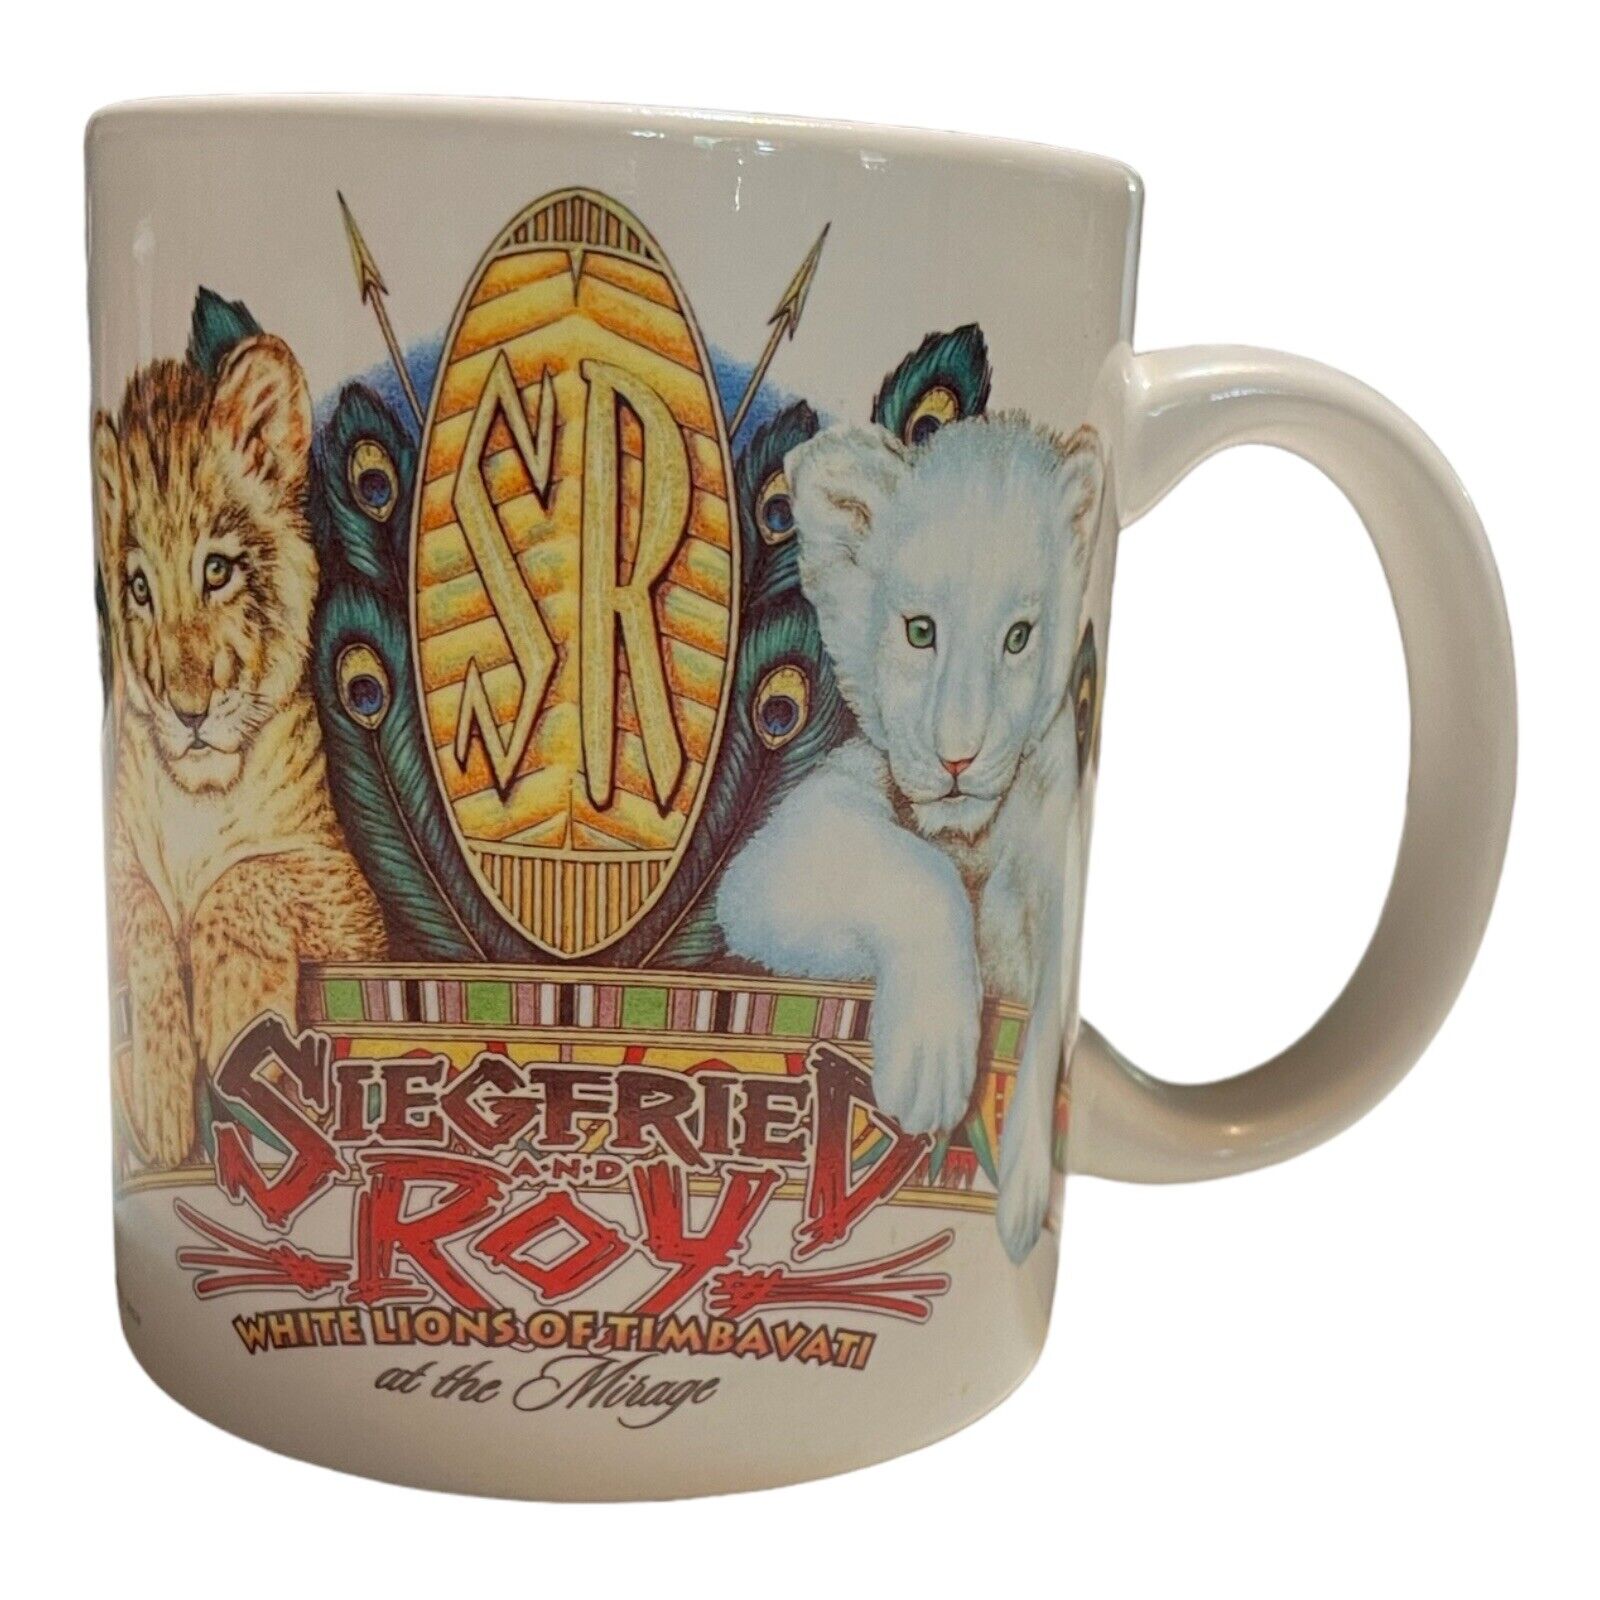 VTG Siegfried & Roy White Lions of Timbavati Mirage Graphic Coffee Tea Mug Cup